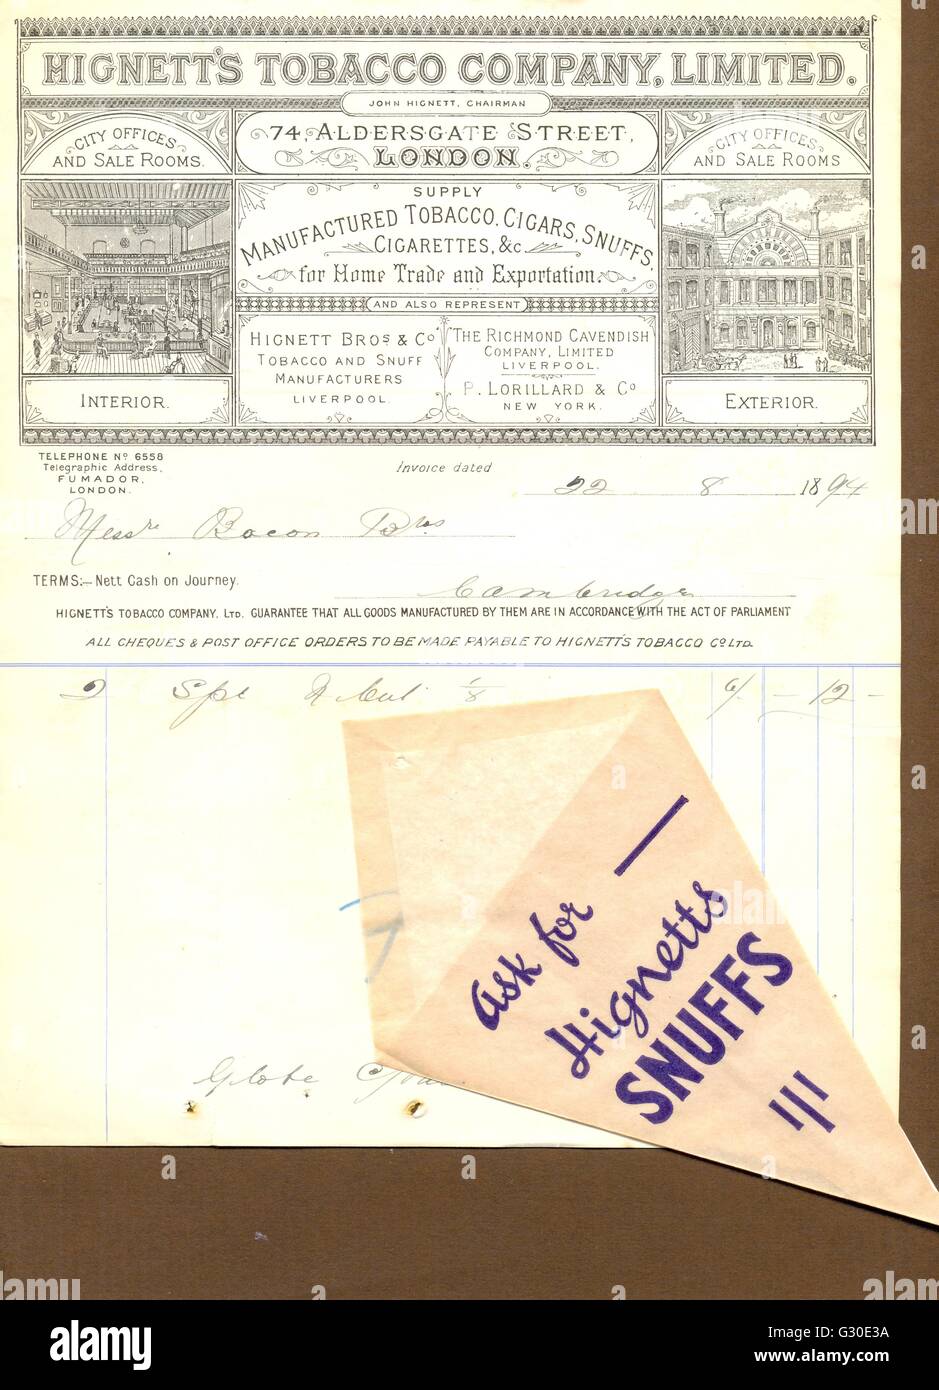 Viktorianische Billhead innen Verkauf Räume der Hignett'e Tobacco Company Stockfoto